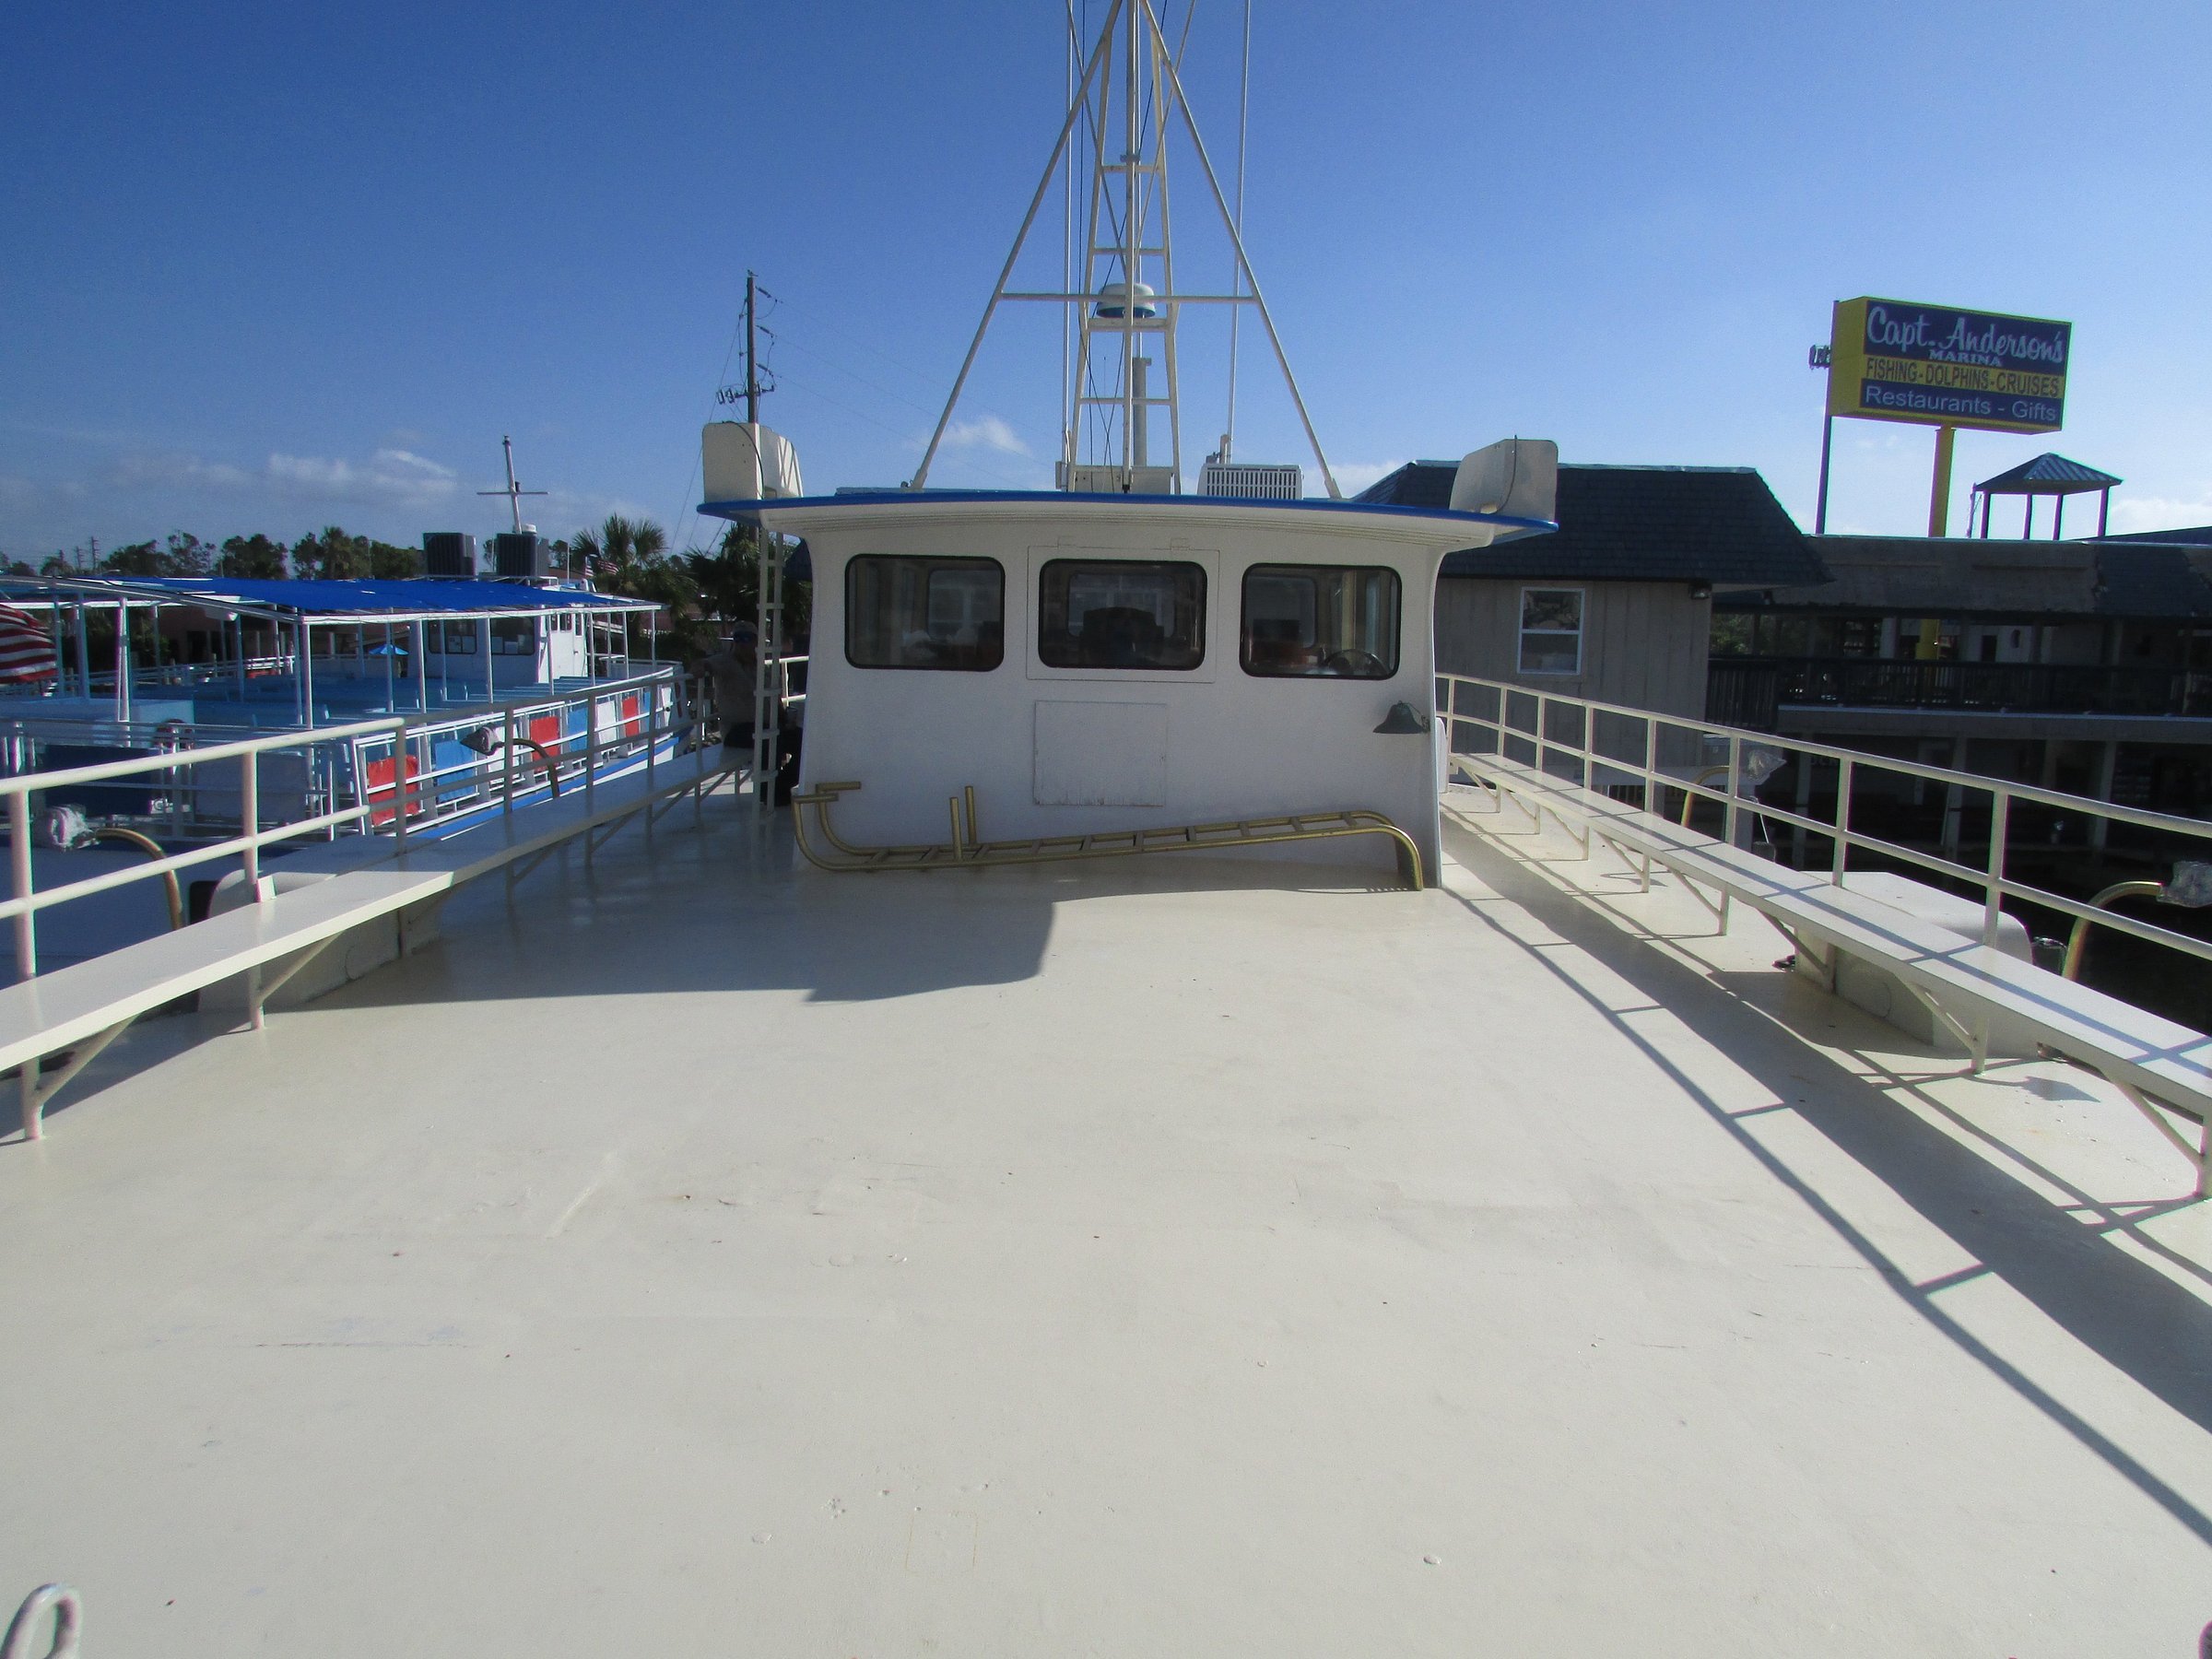 capt. anderson's marina tours